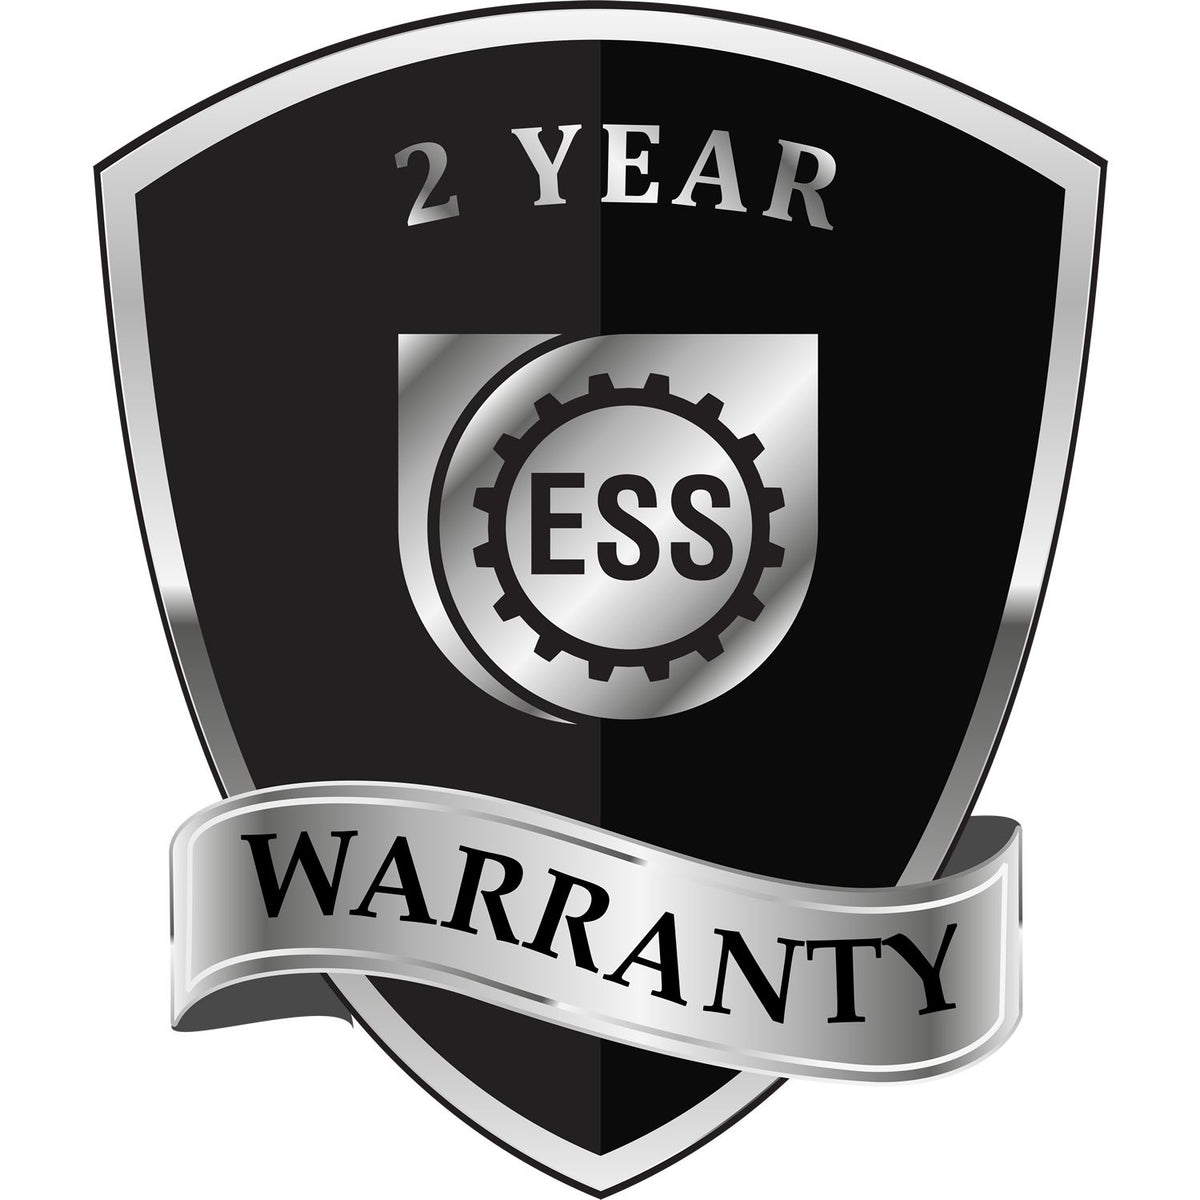 A black and silver badge or emblem showing warranty information for the Gift Kansas Landscape Architect Seal